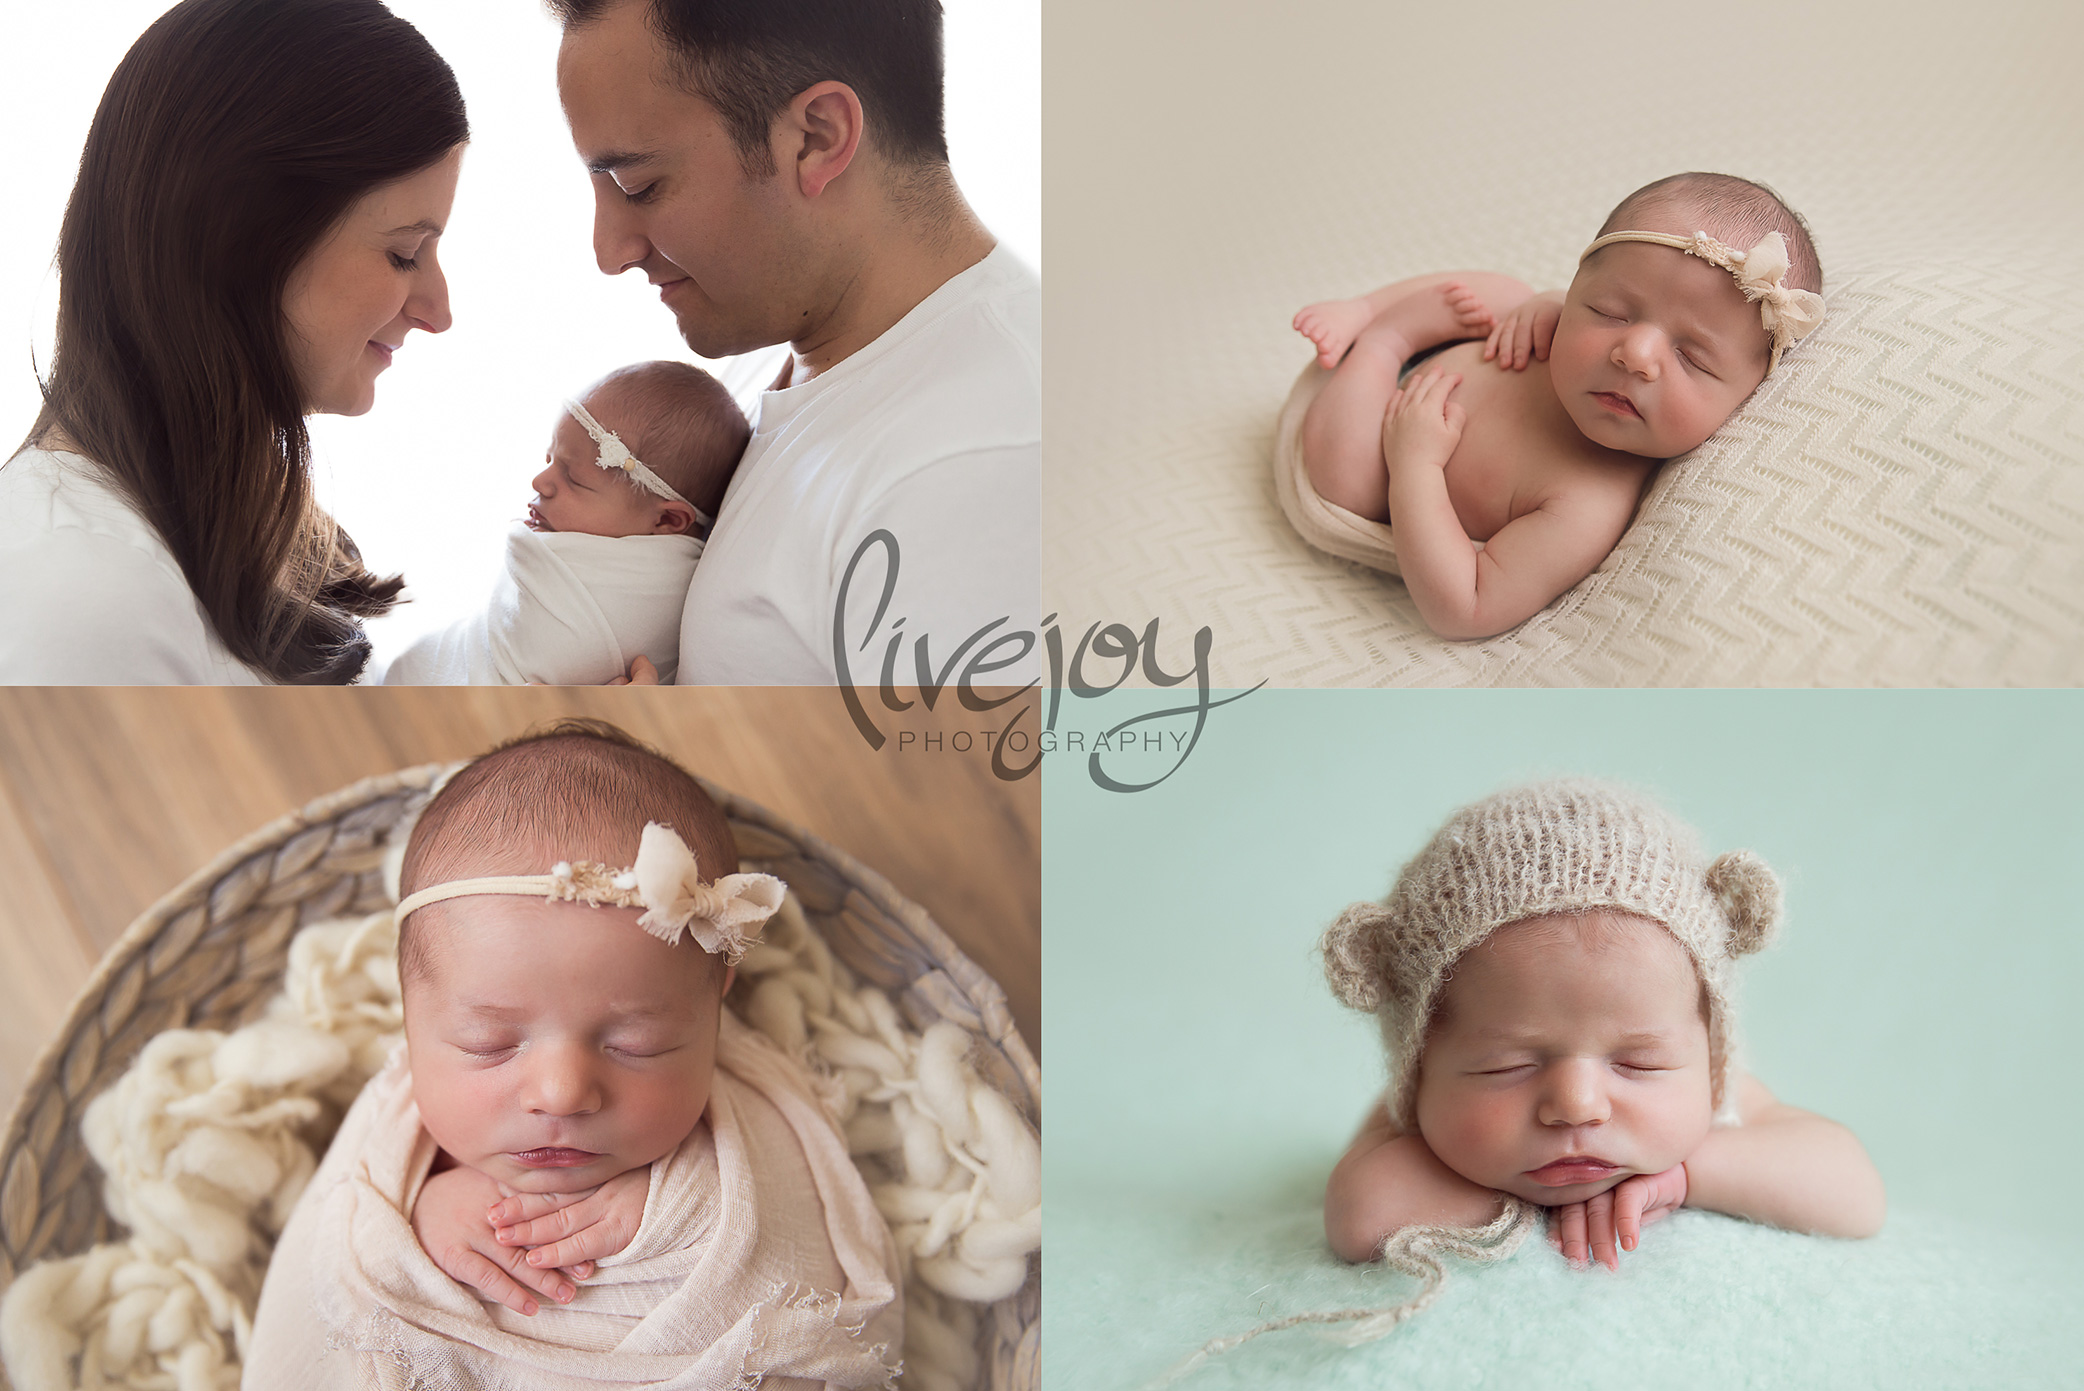 Baby Girl | Newborn Photography | Oregon | LiveJoy Photography